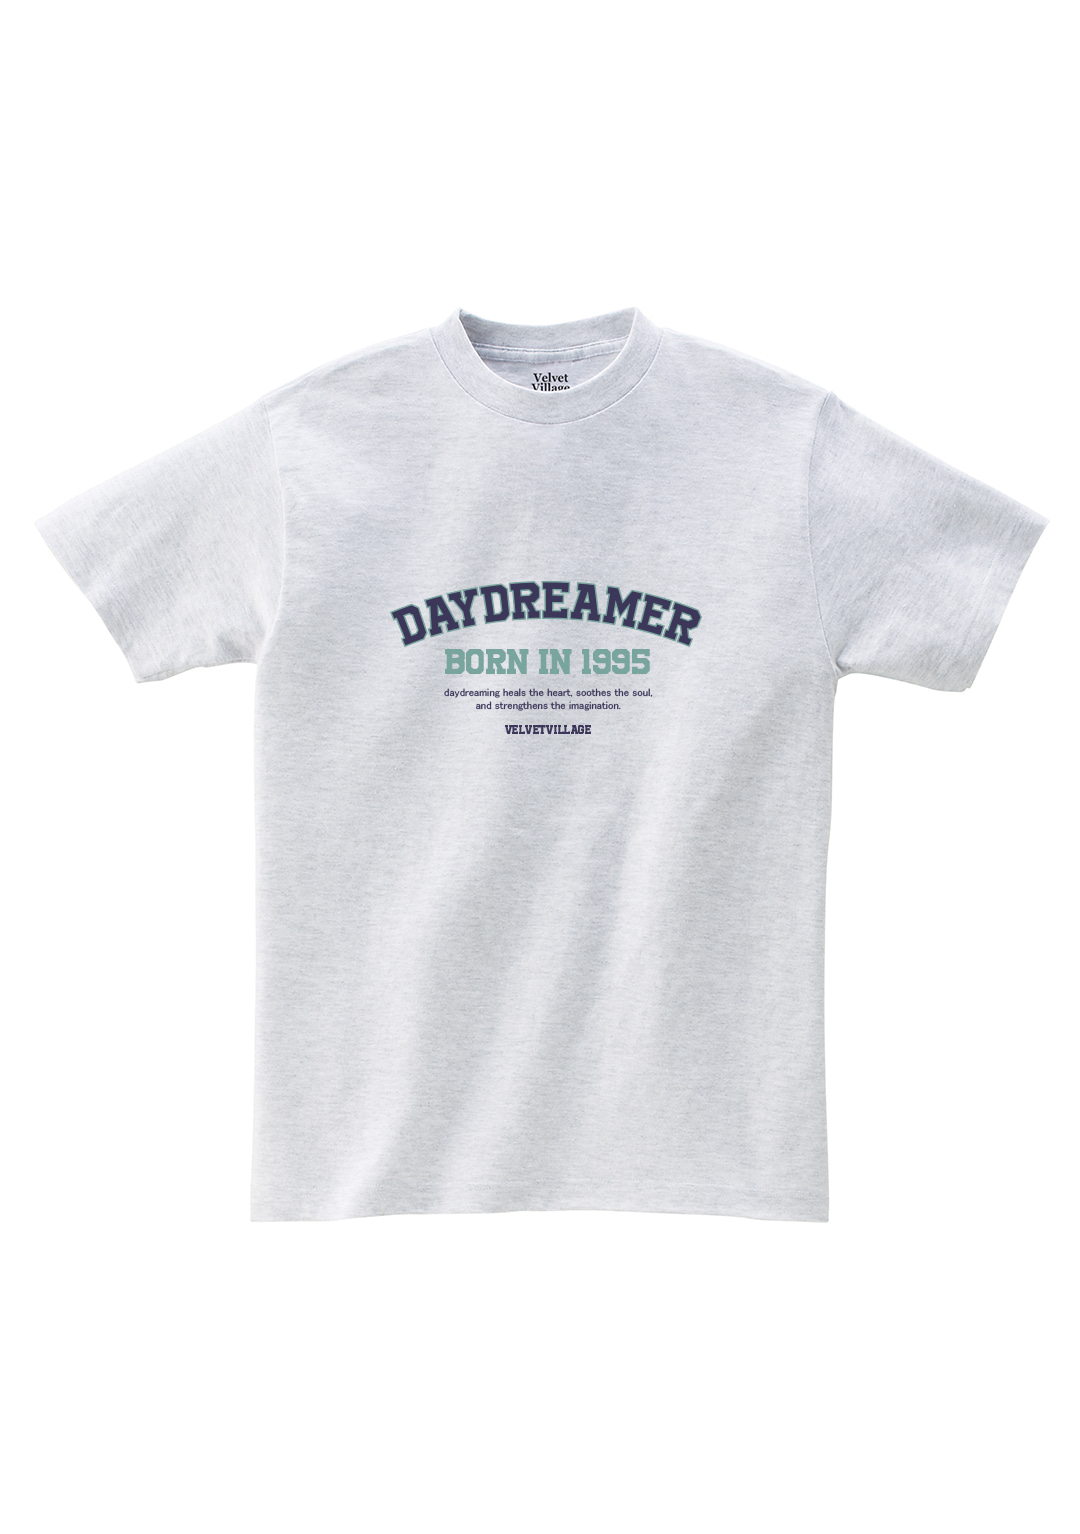 Daydreamer T-shirt (Melange Grey)